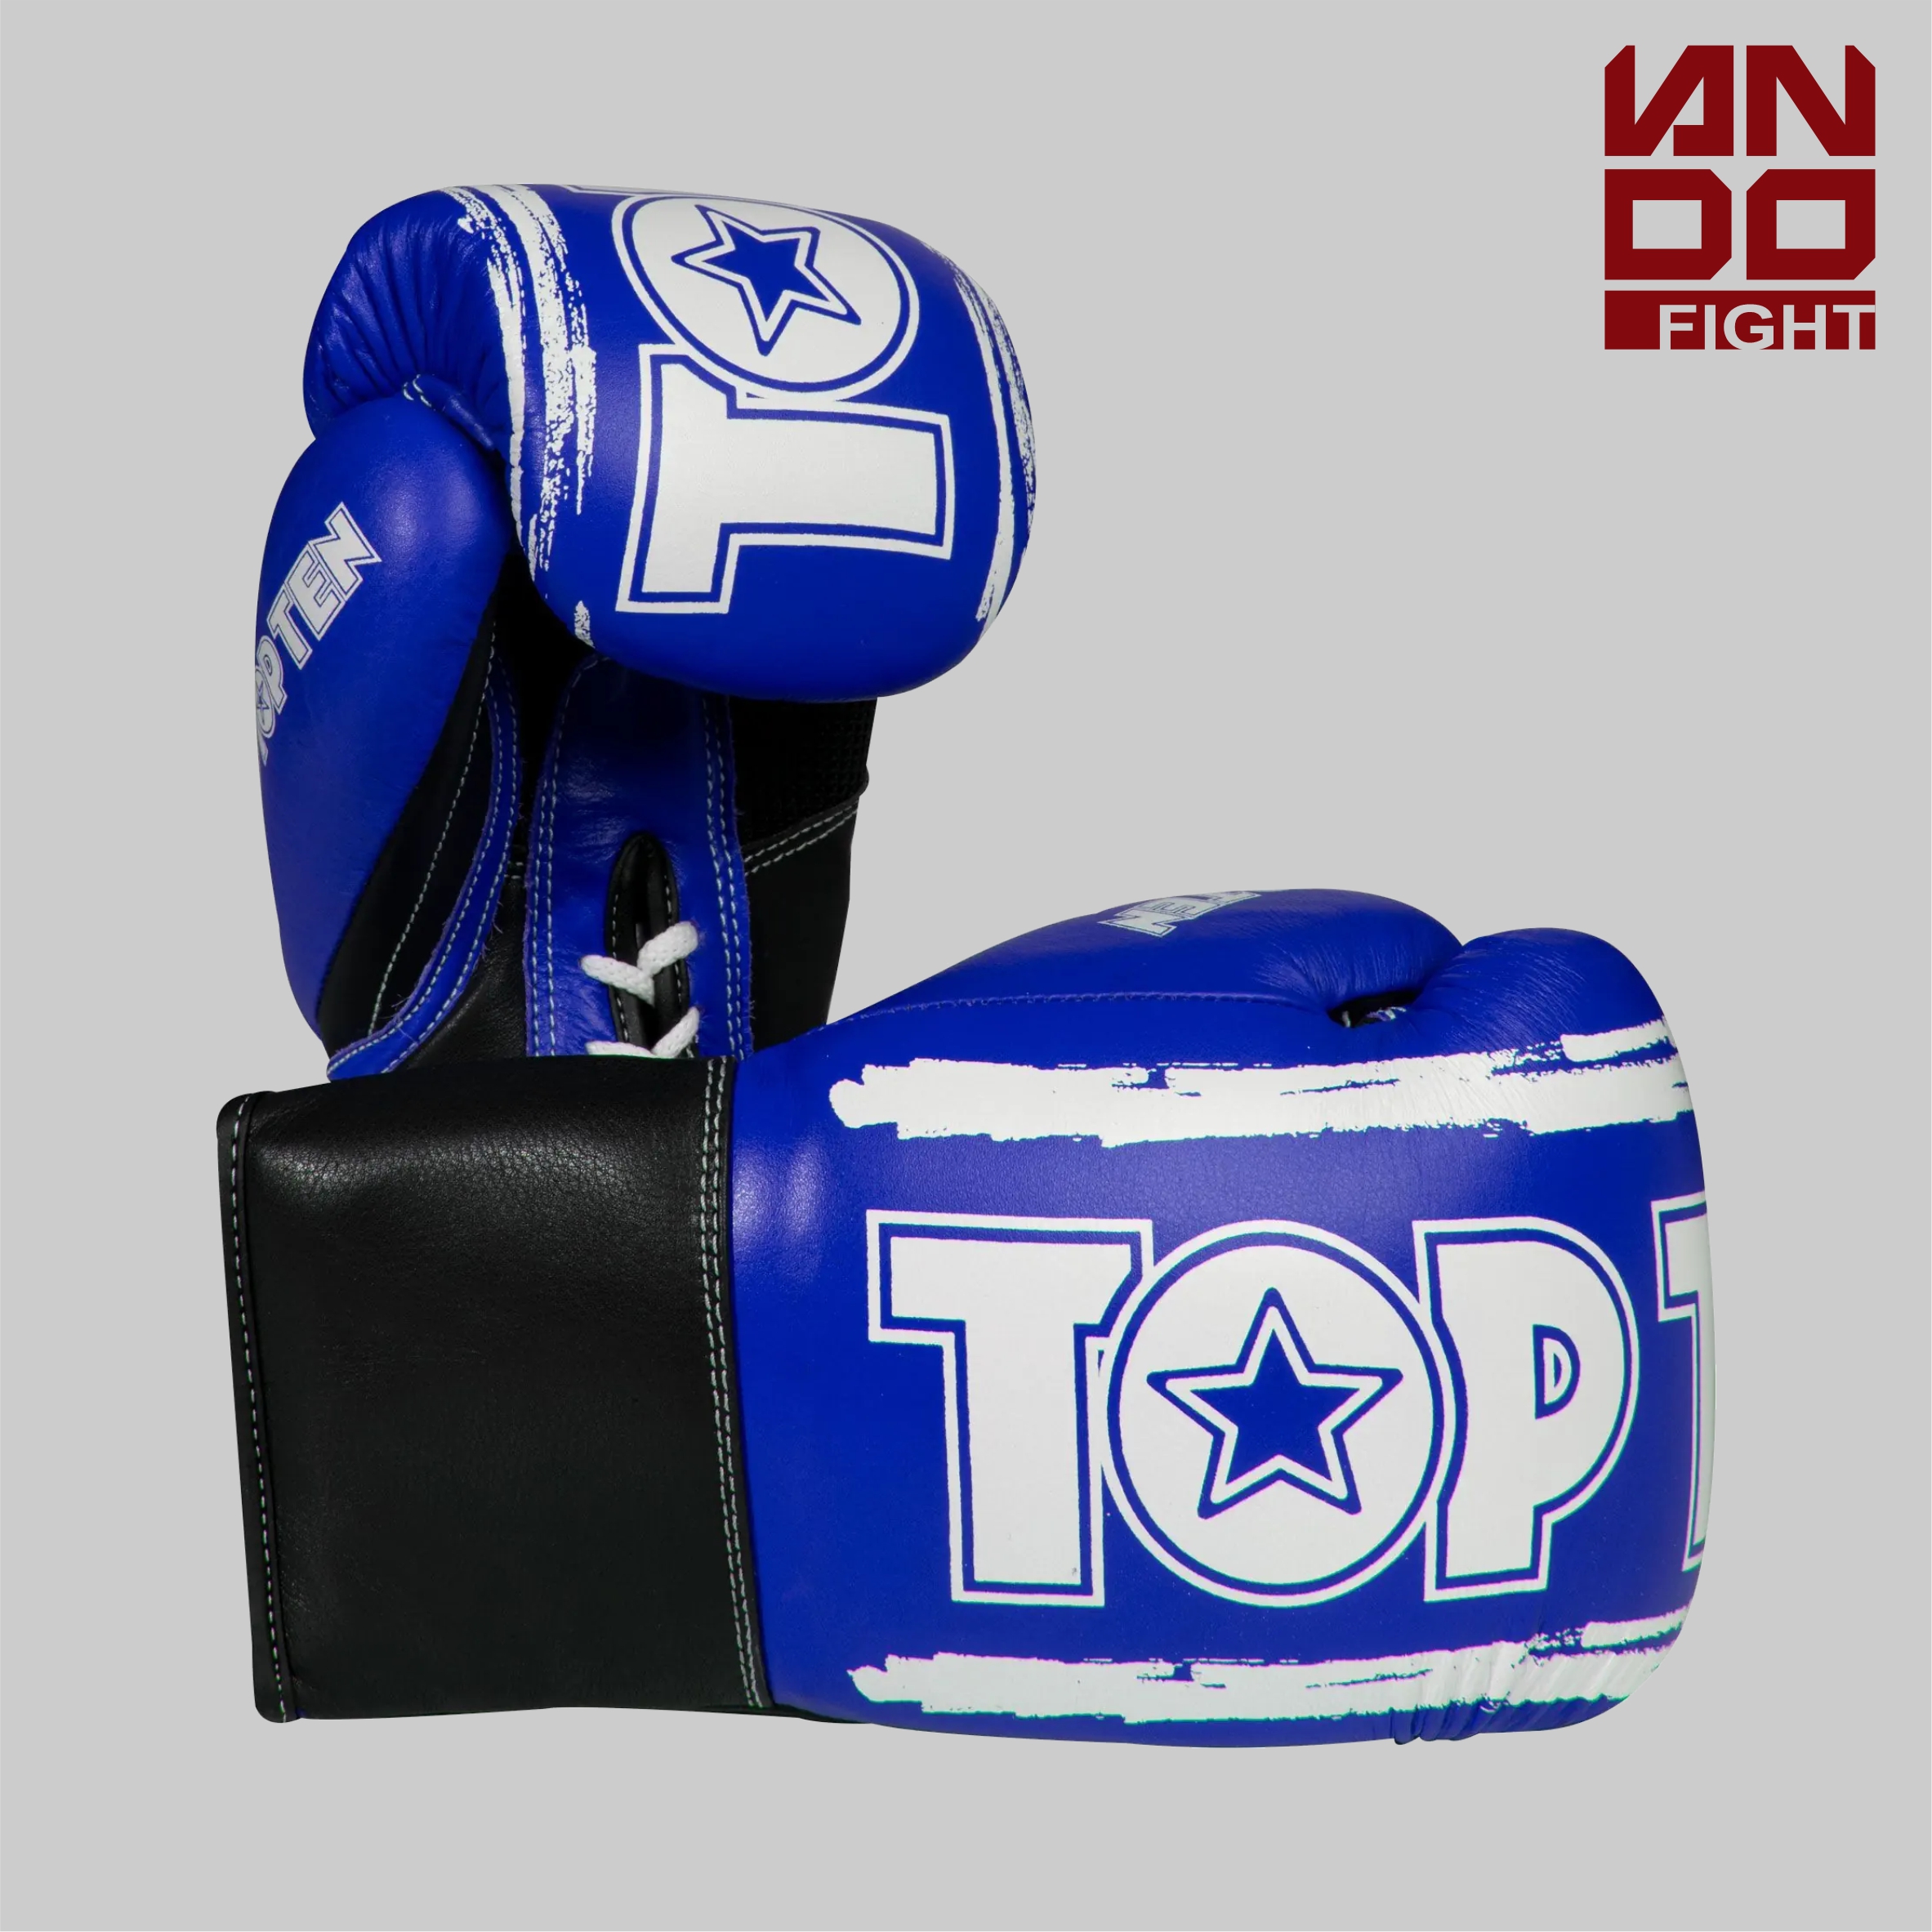 TOP TEN Boxing gloves “RoundUP” Синие